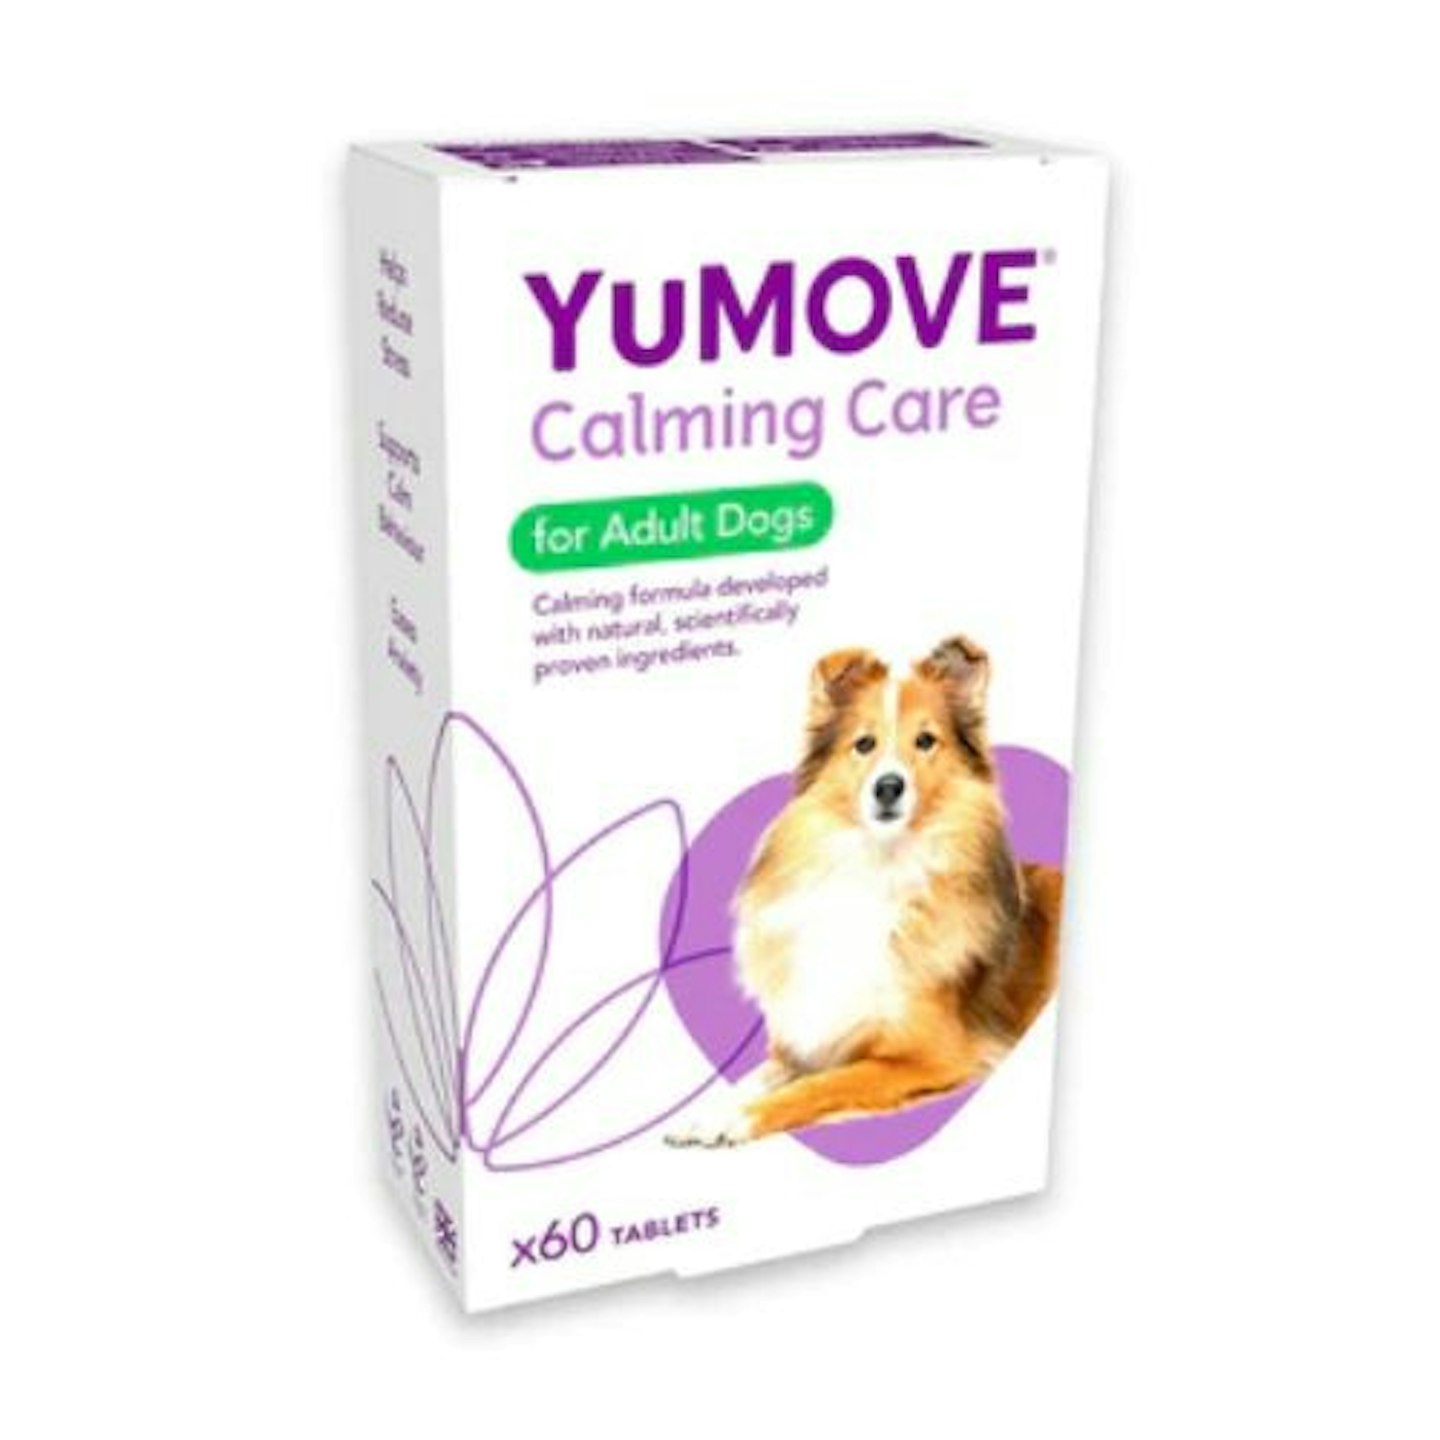 YuMOVE Calming Care